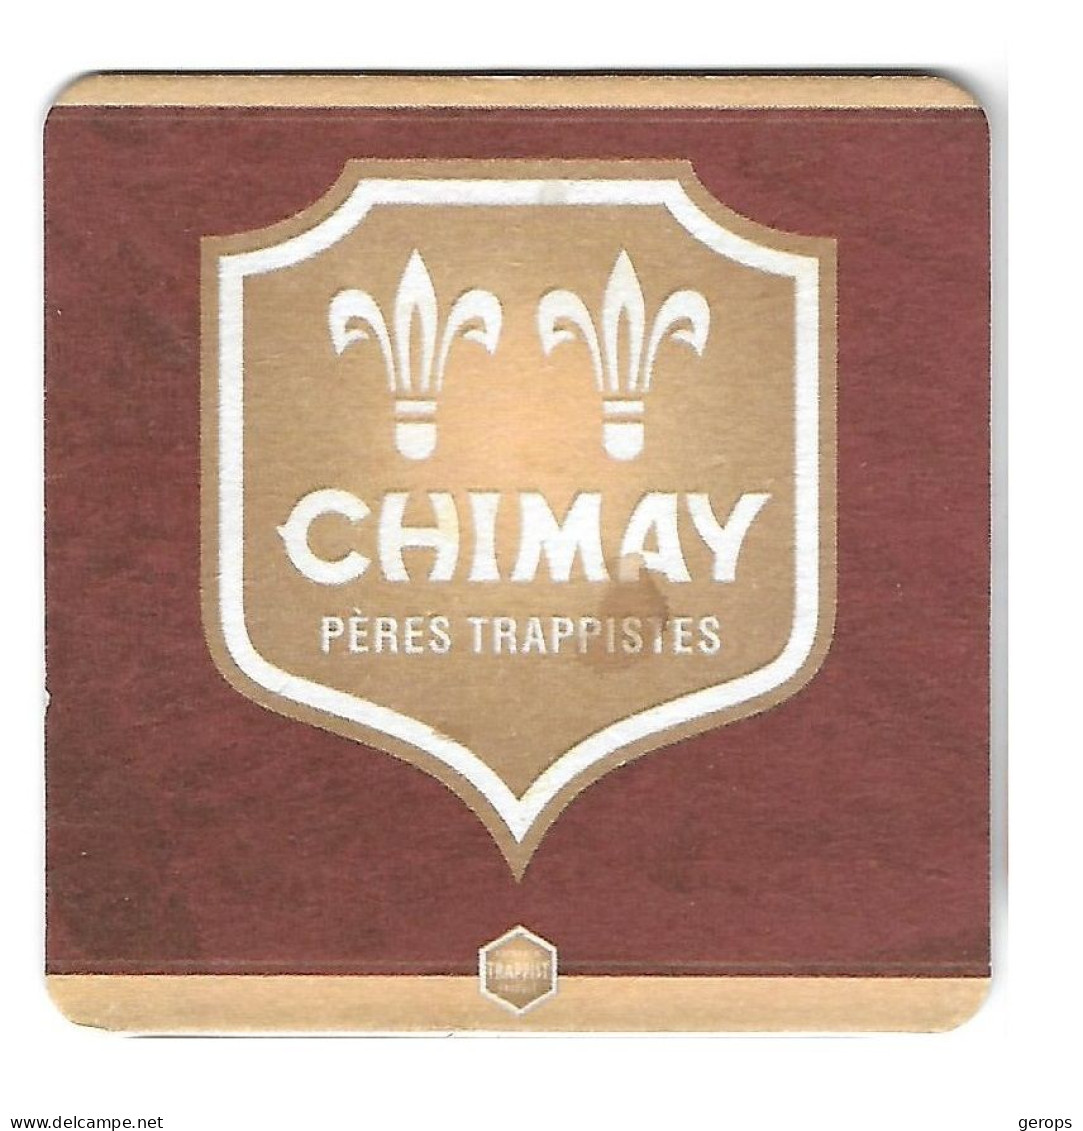 29a Chimay  Trappistes 94-94 (kleine Hoeken) - Beer Mats